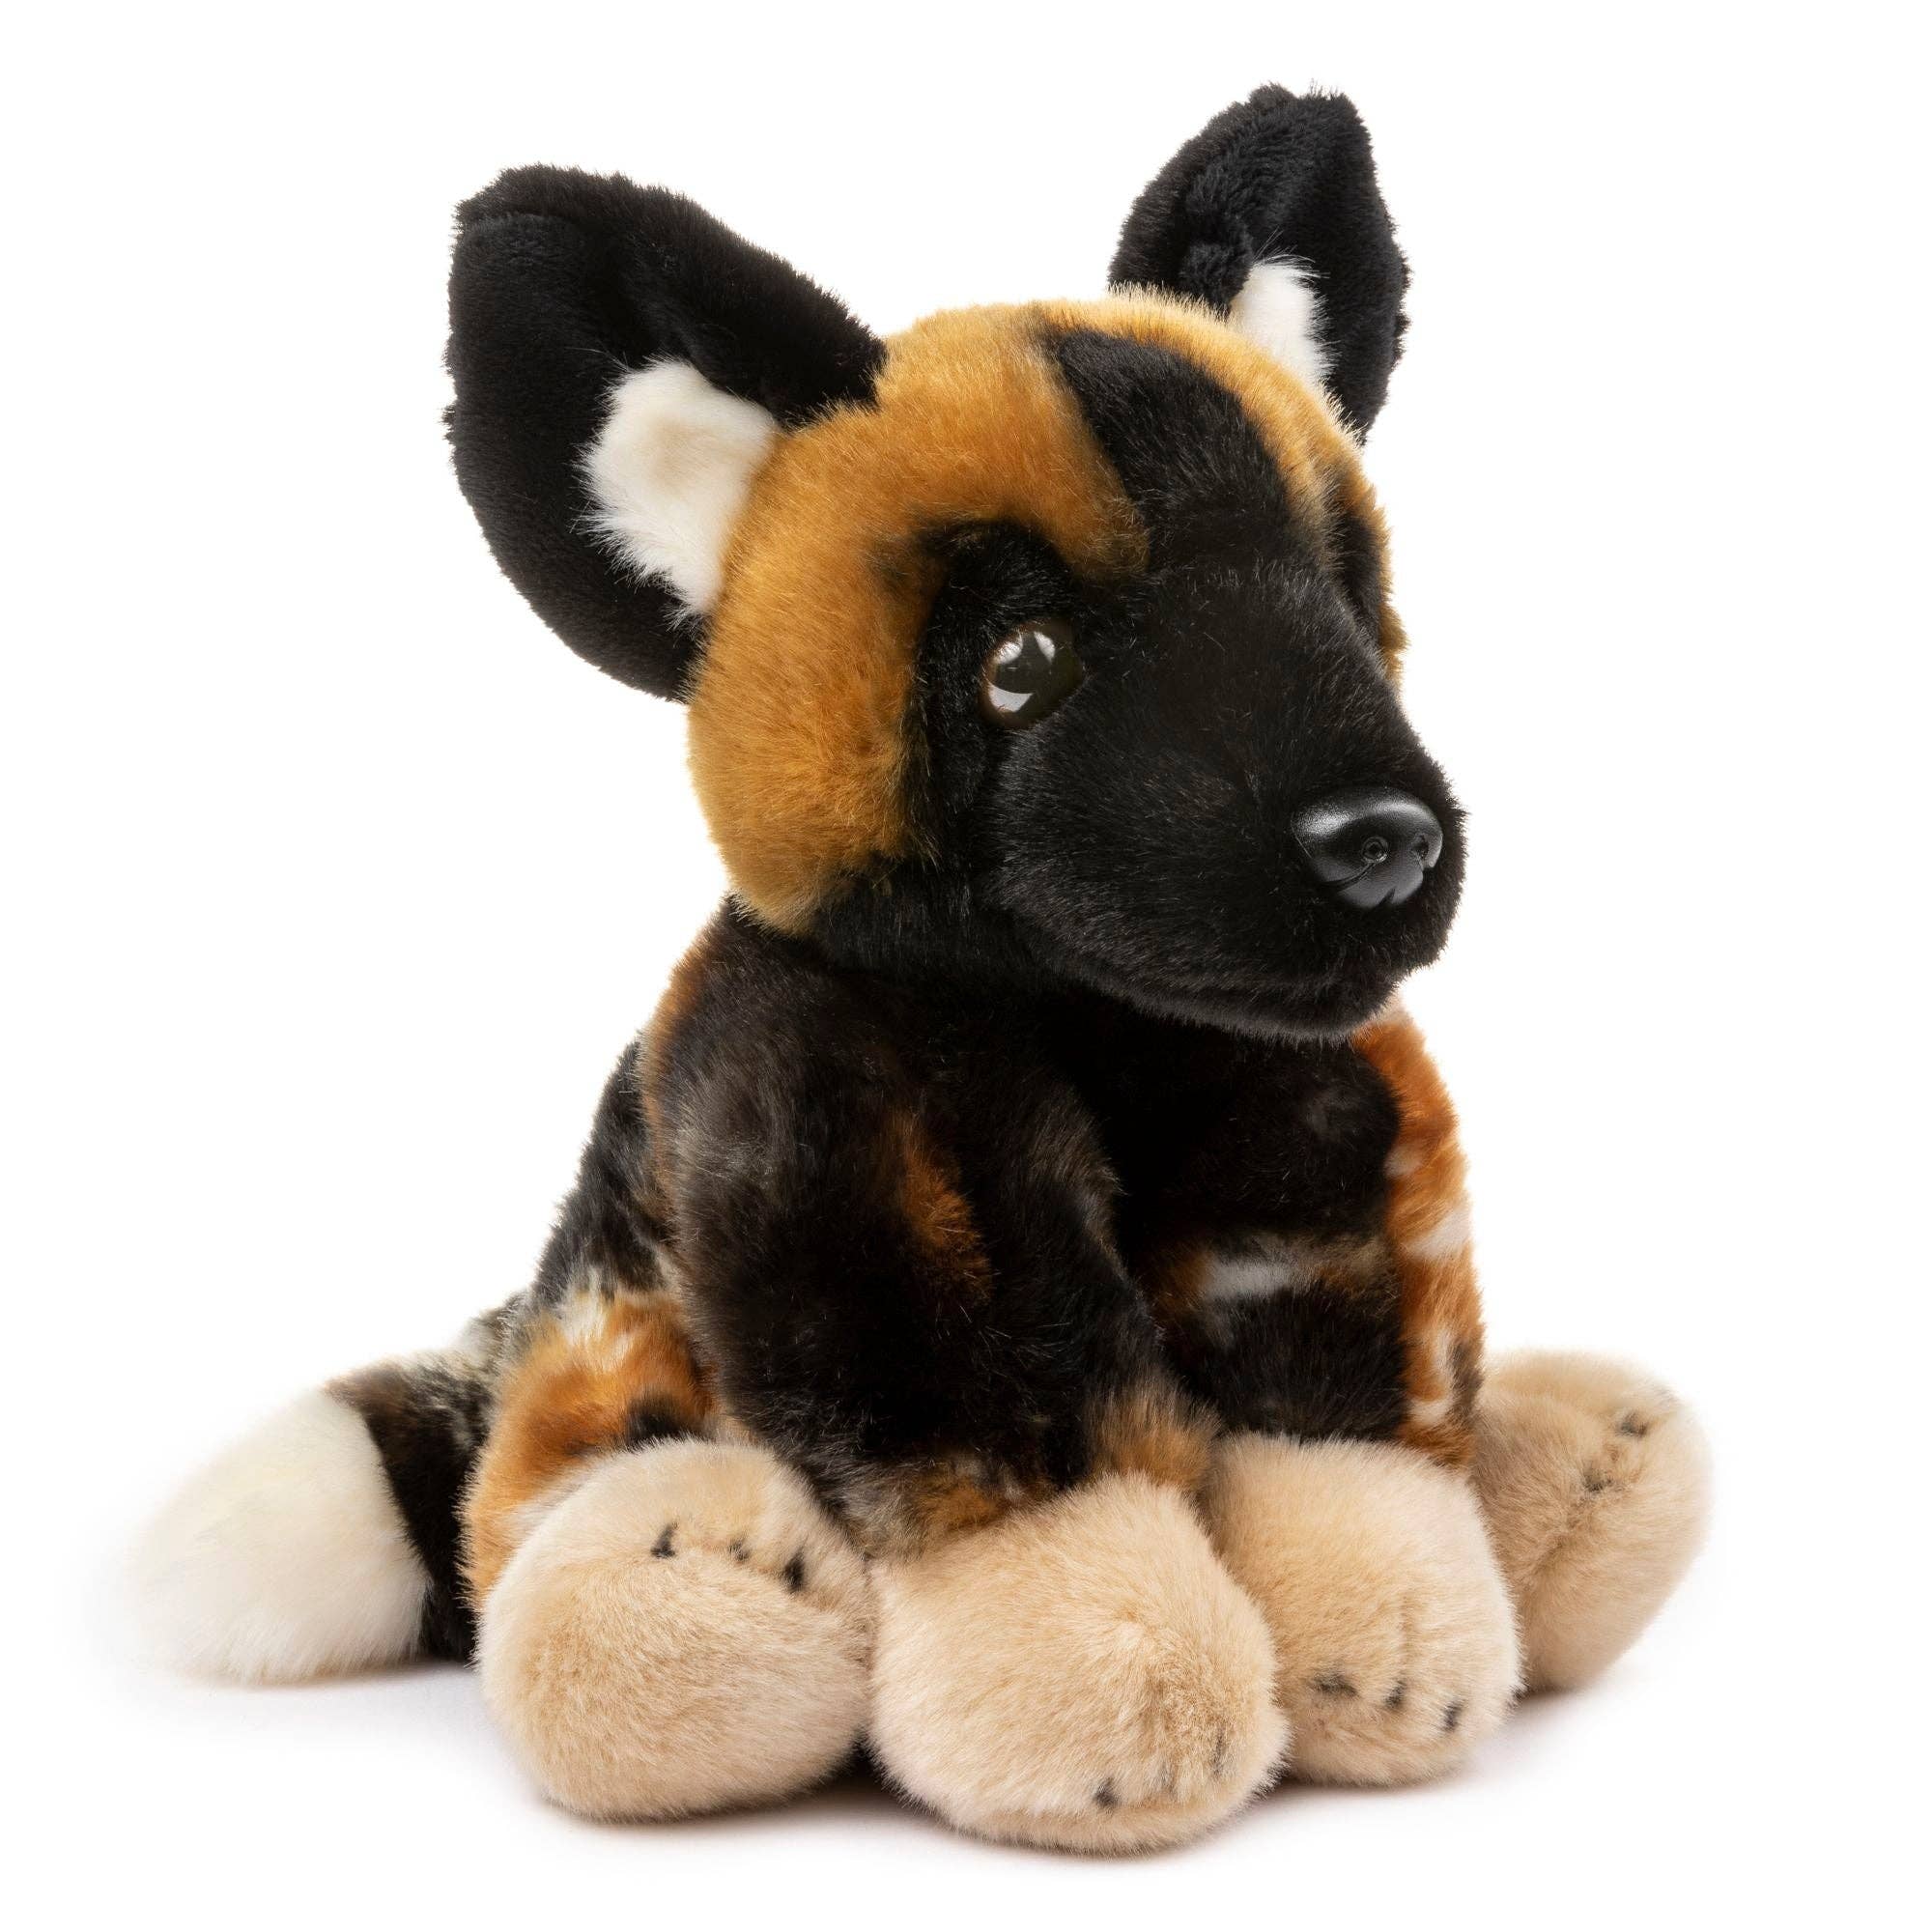 Floppy Plush African Wild Dog Toy 12" by Wildlife Tree